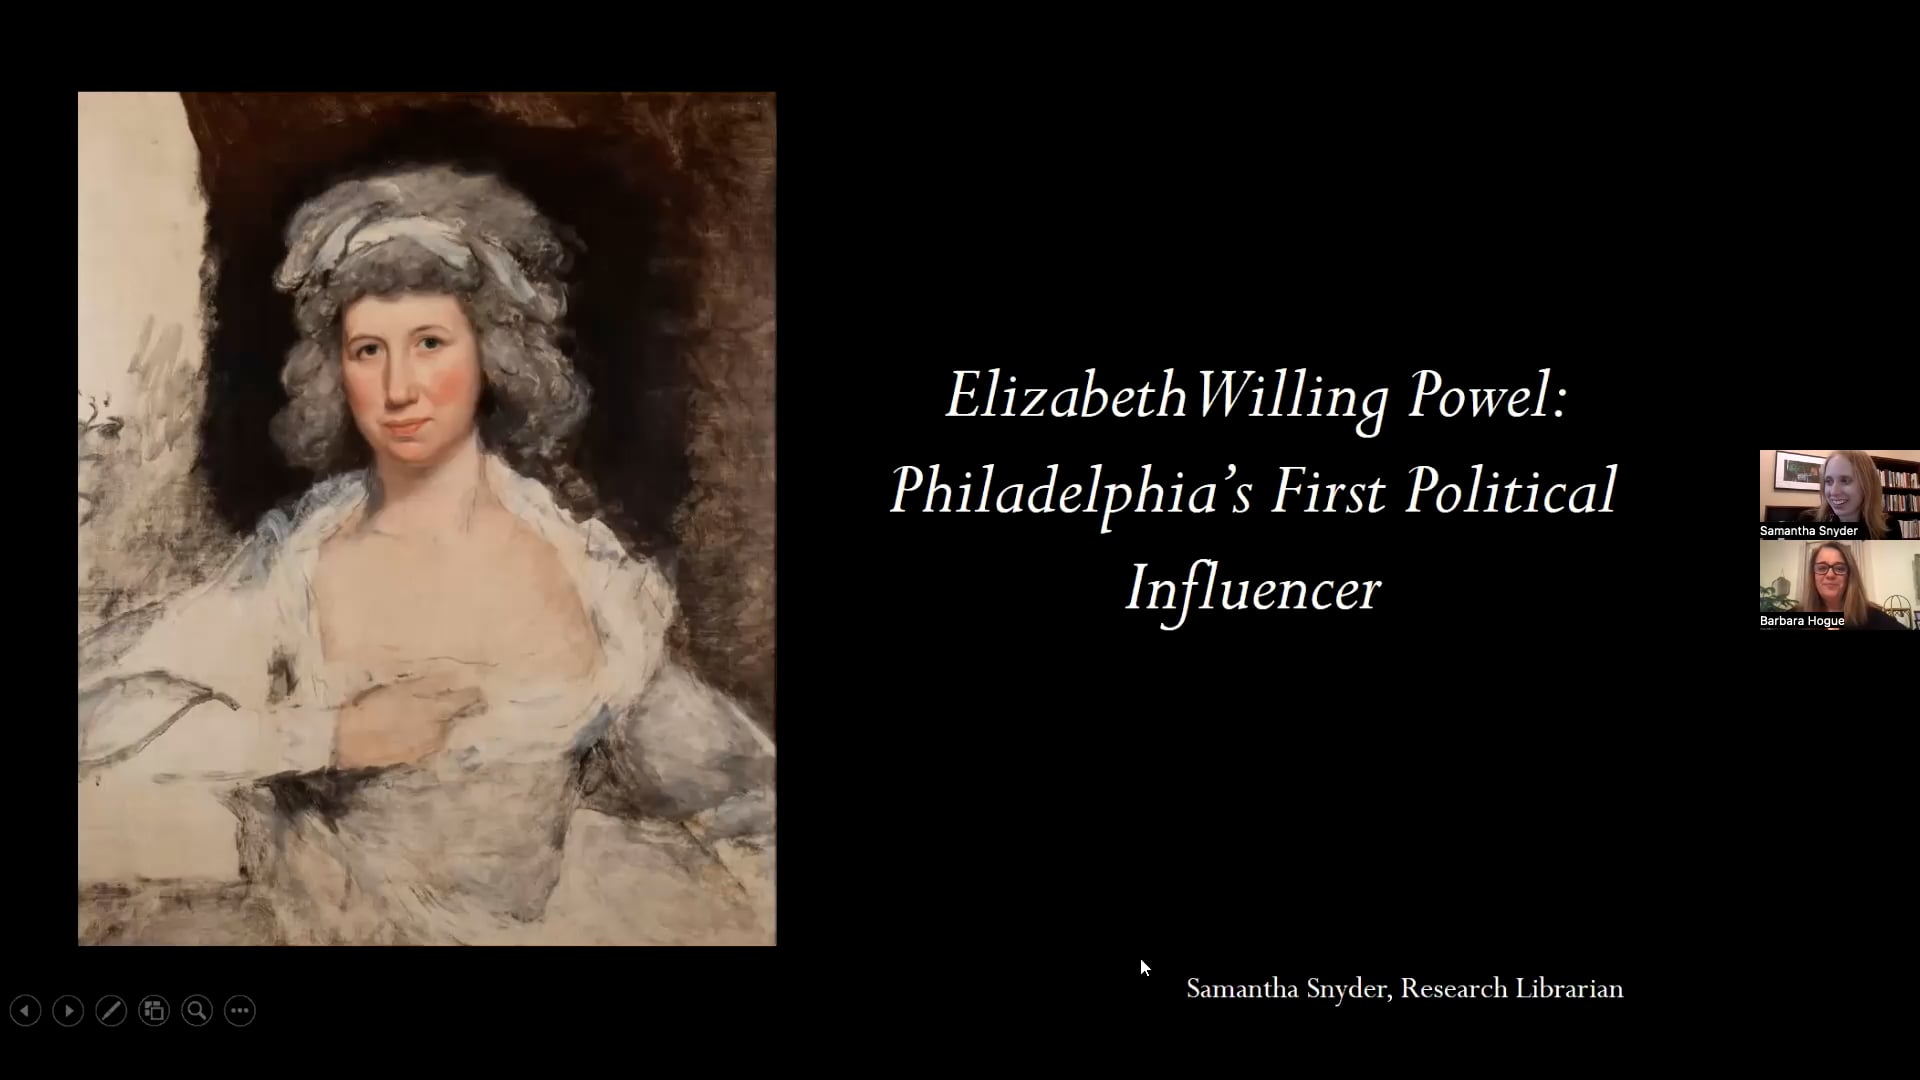 Elizabeth Willing Powel's Philadelphia's First Political Influencer